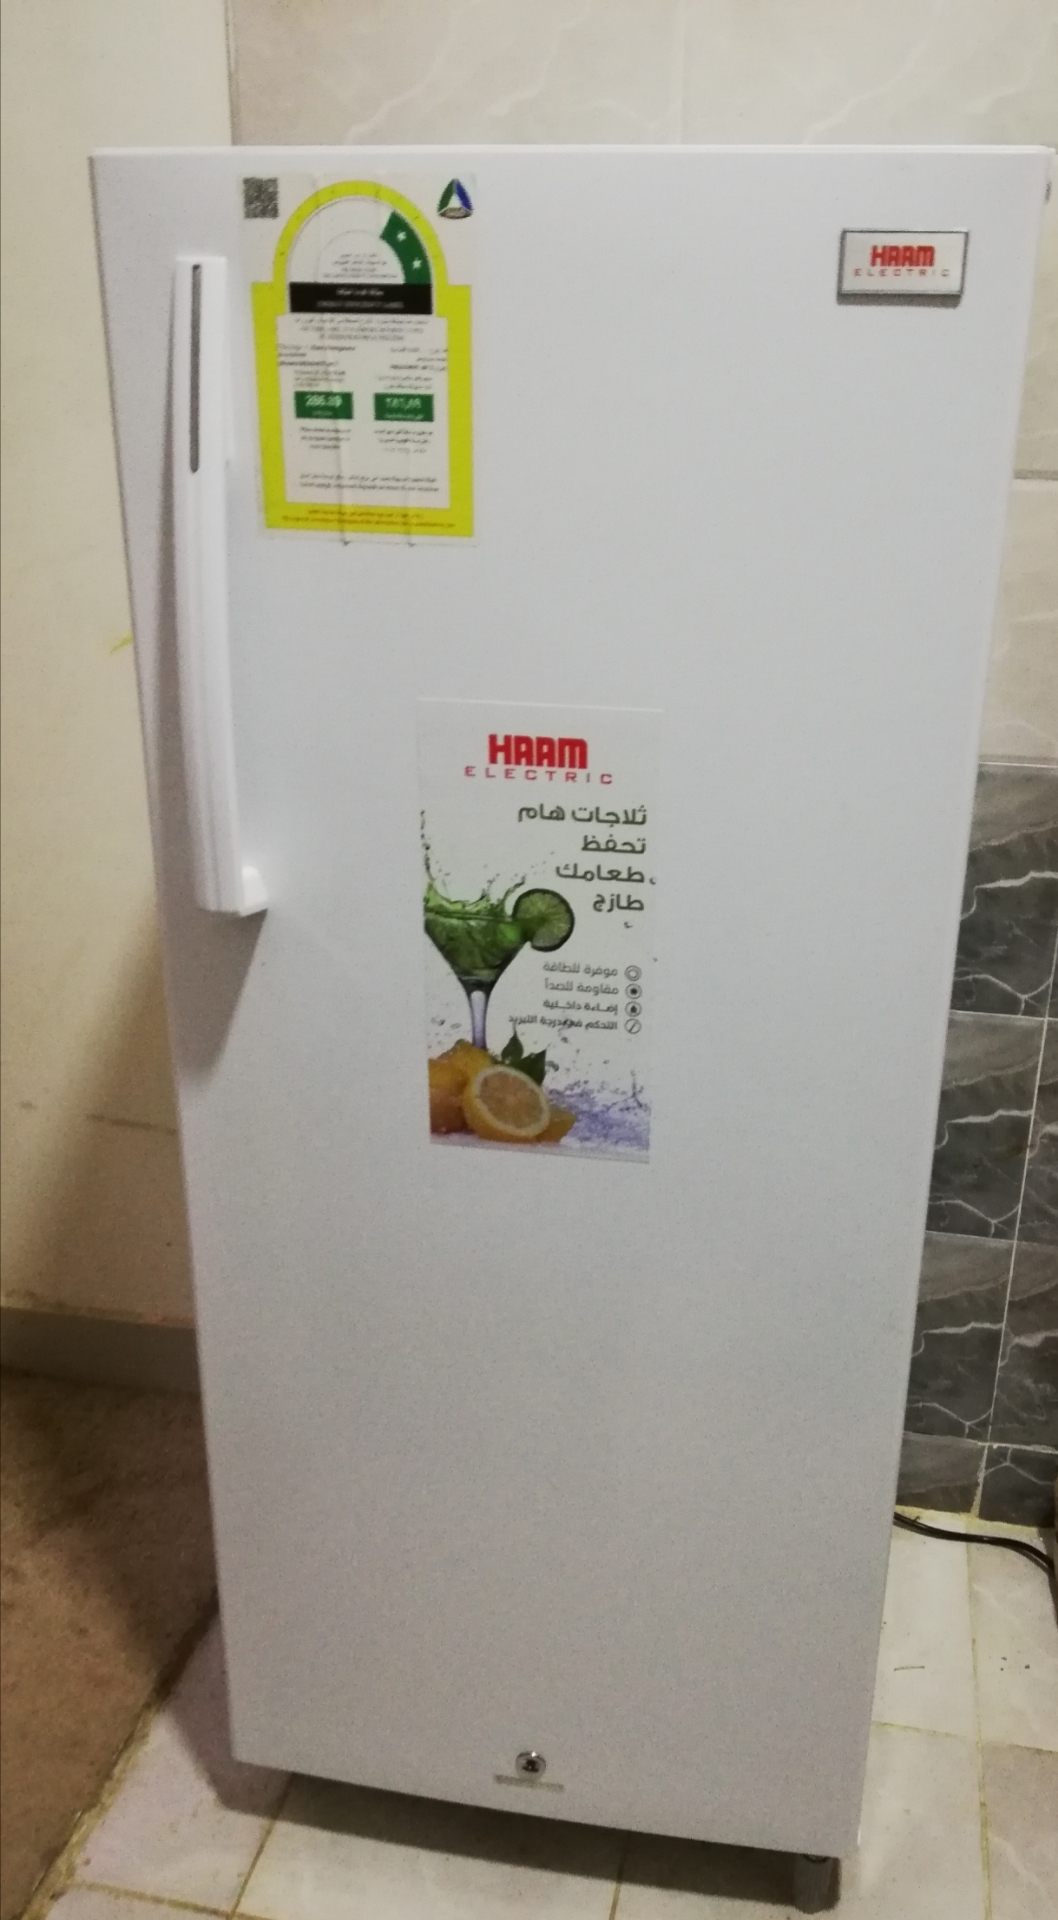 LG latest model fridge with 2doors up and down-  ثلاجه للبيع استخدام كم...